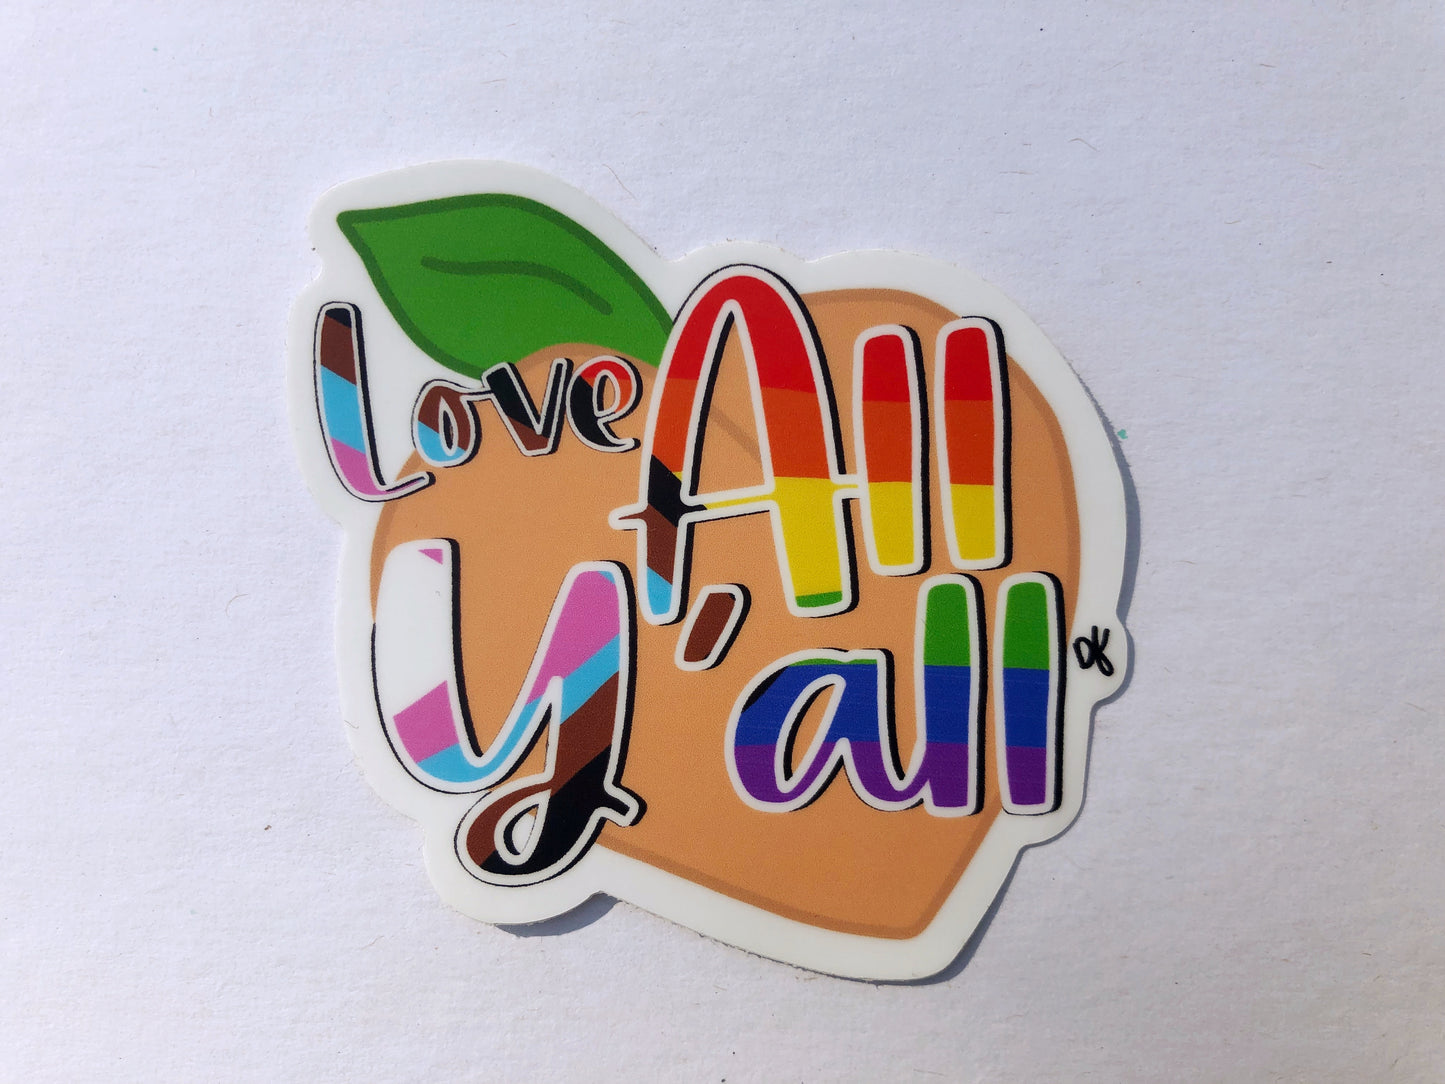 Love All Y'all Peach Sticker